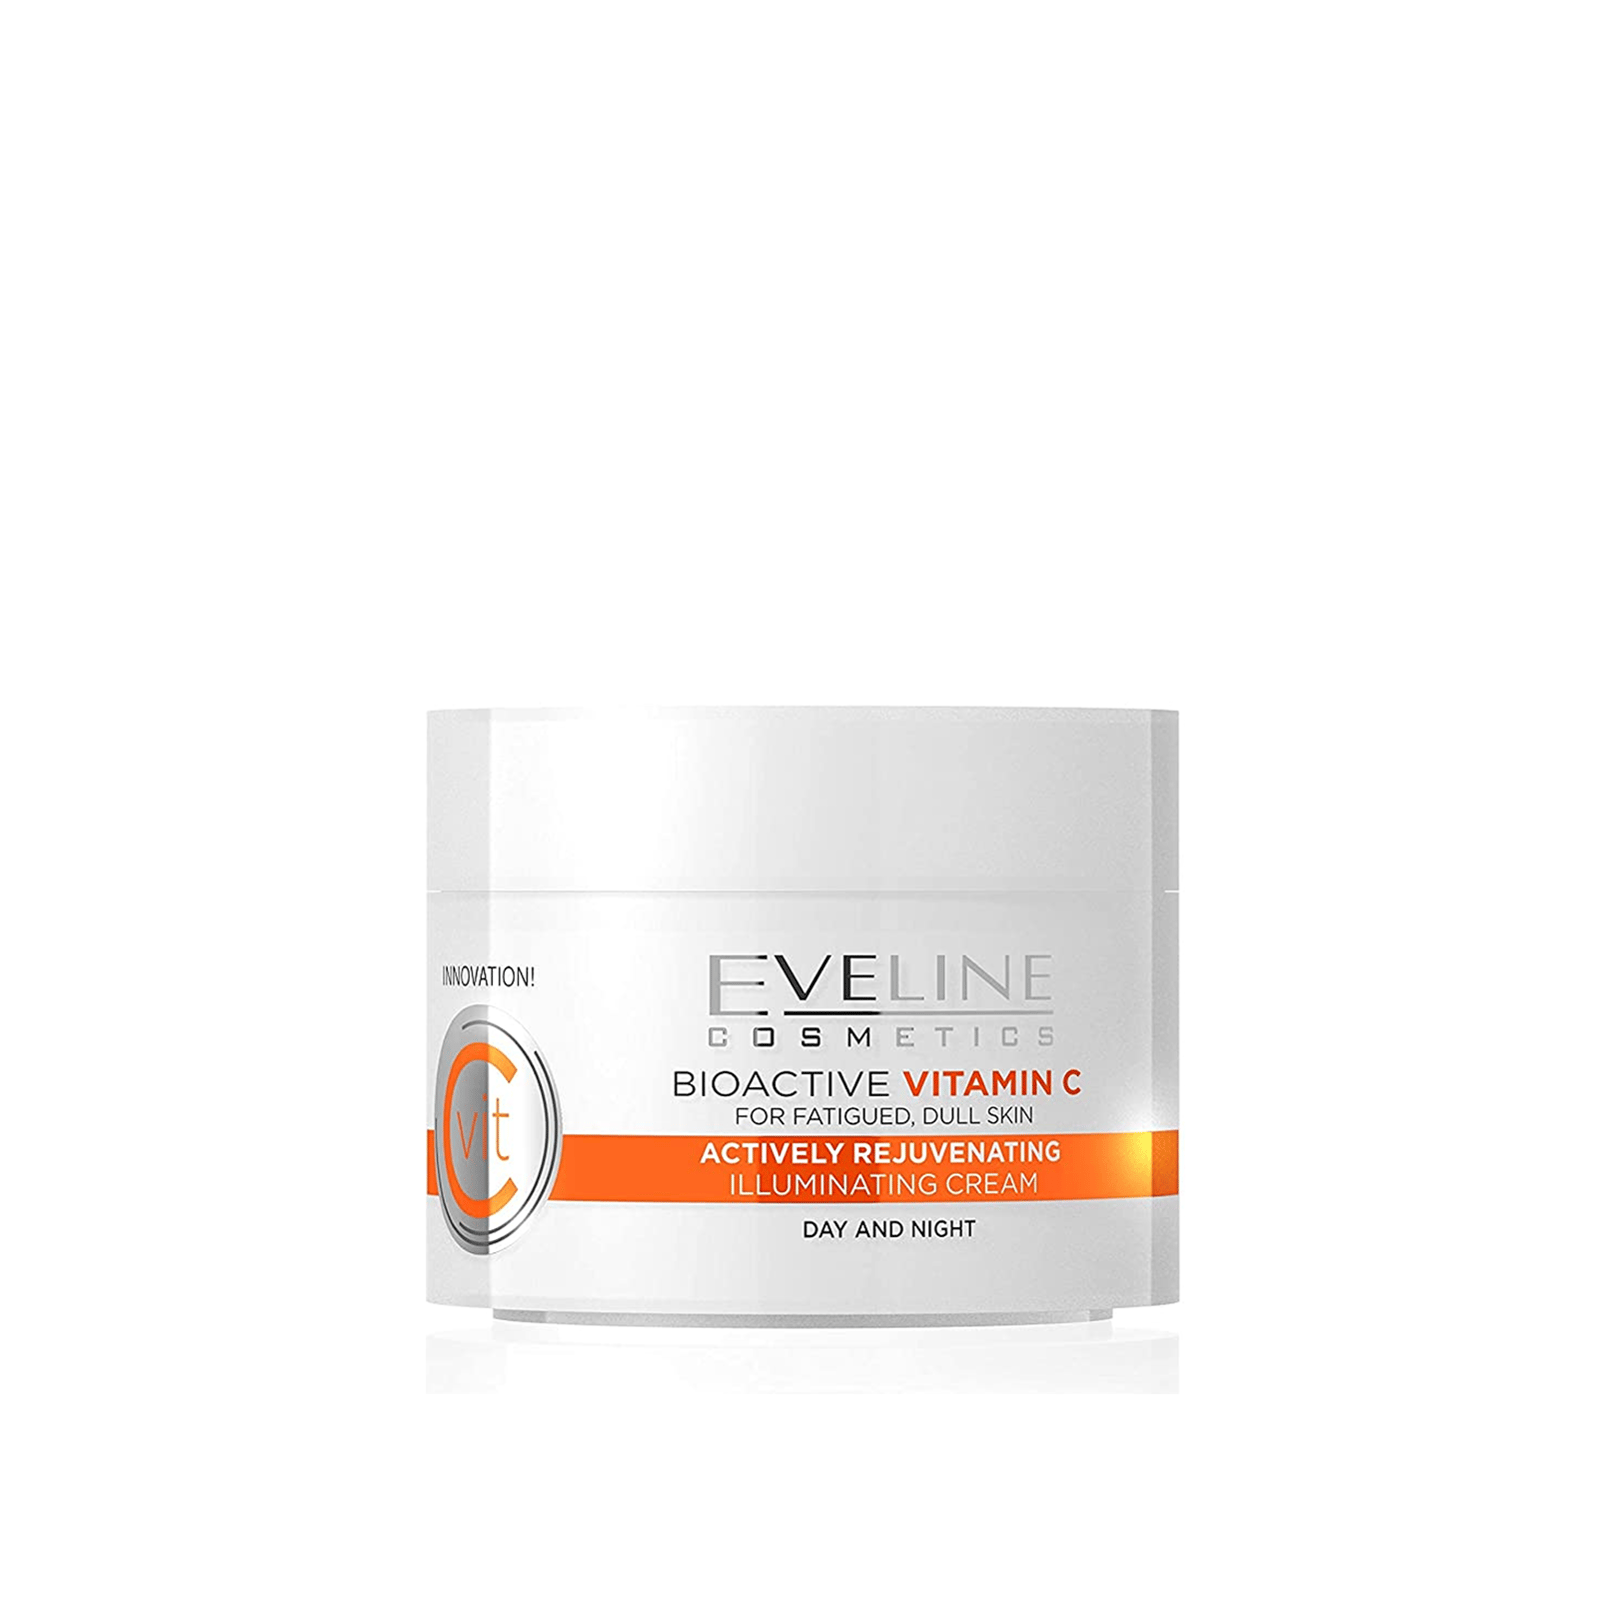 Eveline Cosmetics Bioactive Vitamin C Actively Rejuvenating Cream 50ml (1.76 fl oz)